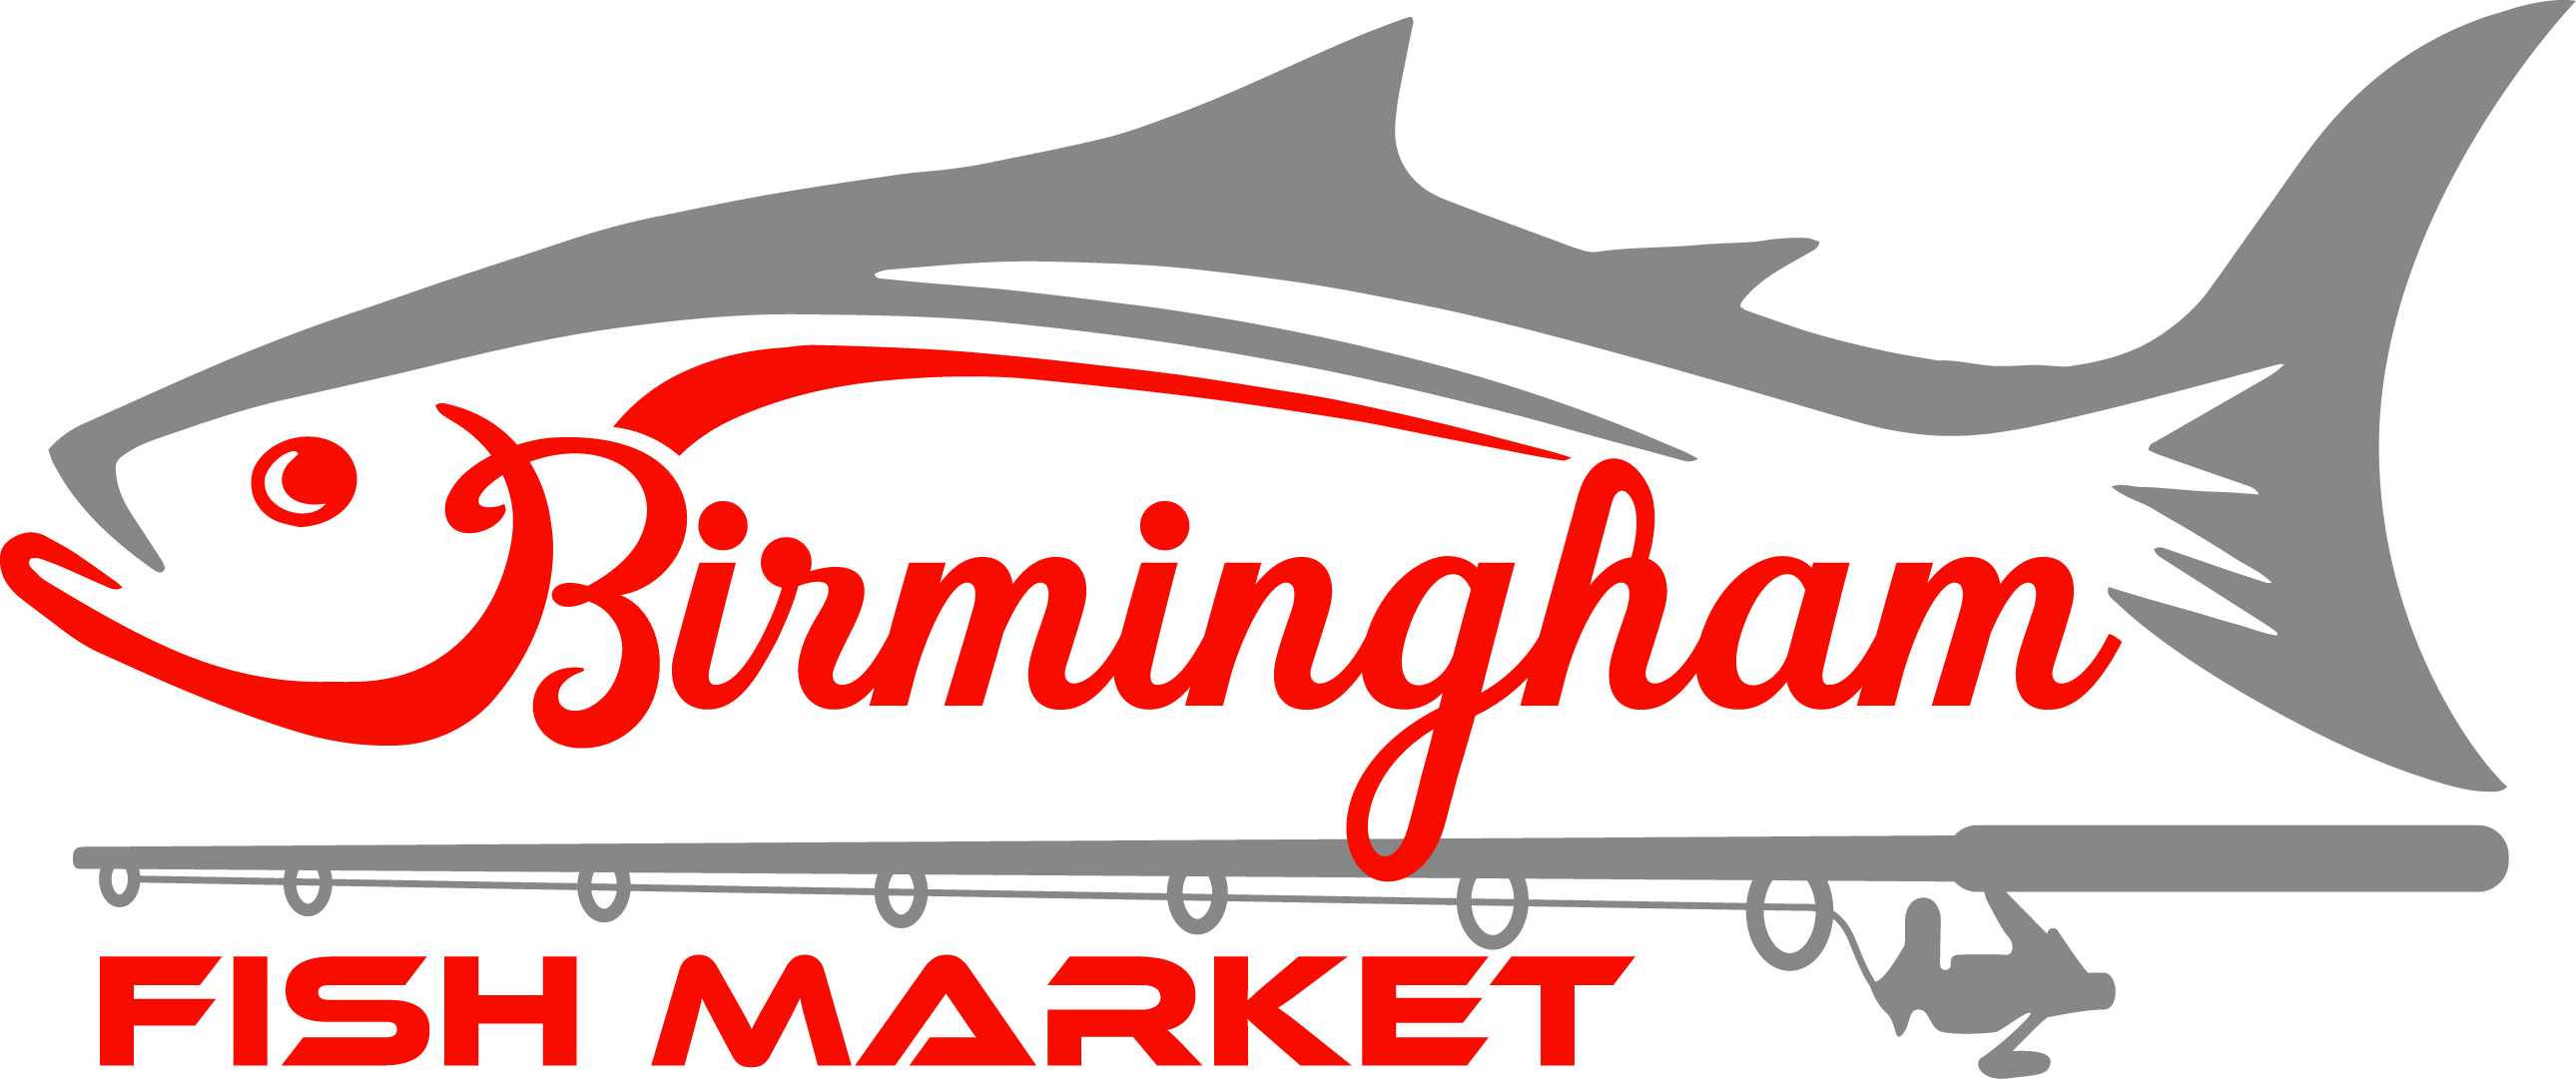 birmingham fish market